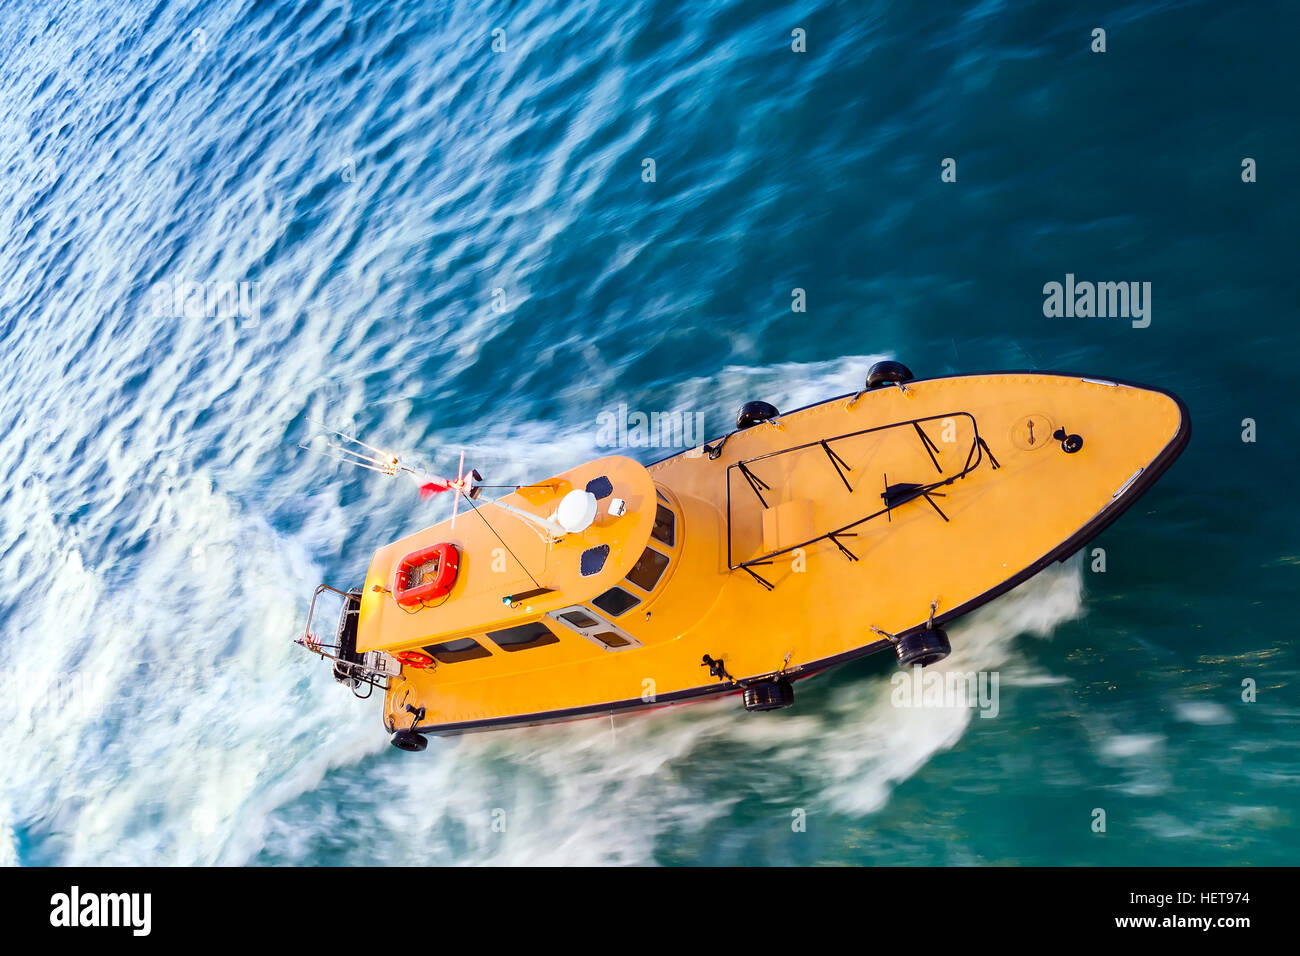 Panning motion blurred shot of speeding Yellow Pilot Boat at Sea Stock Photo